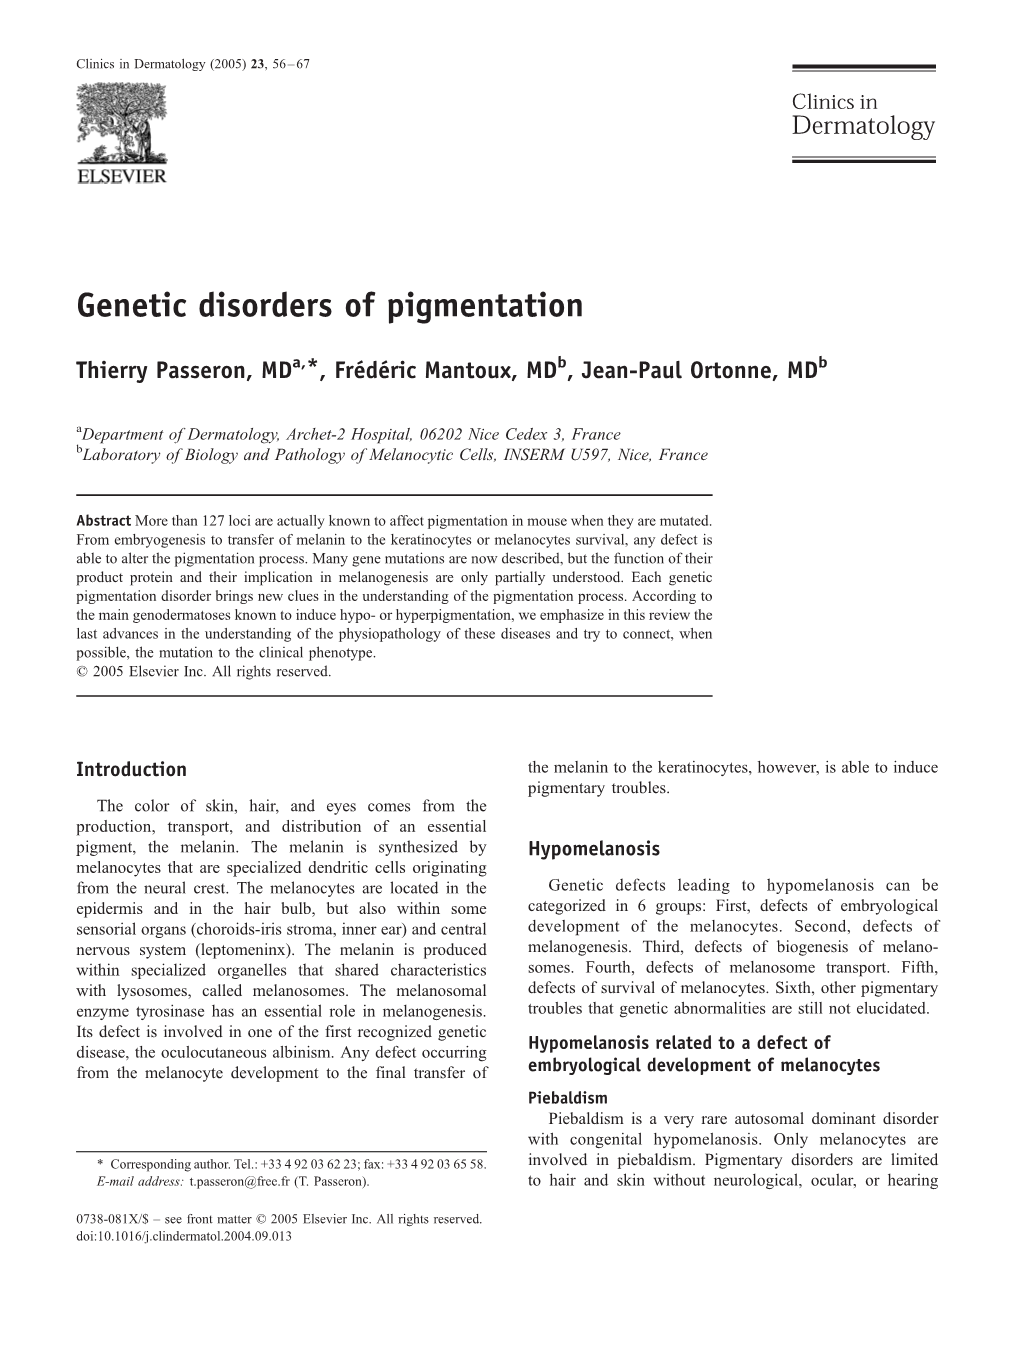 Genetic Disorders of Pigmentation